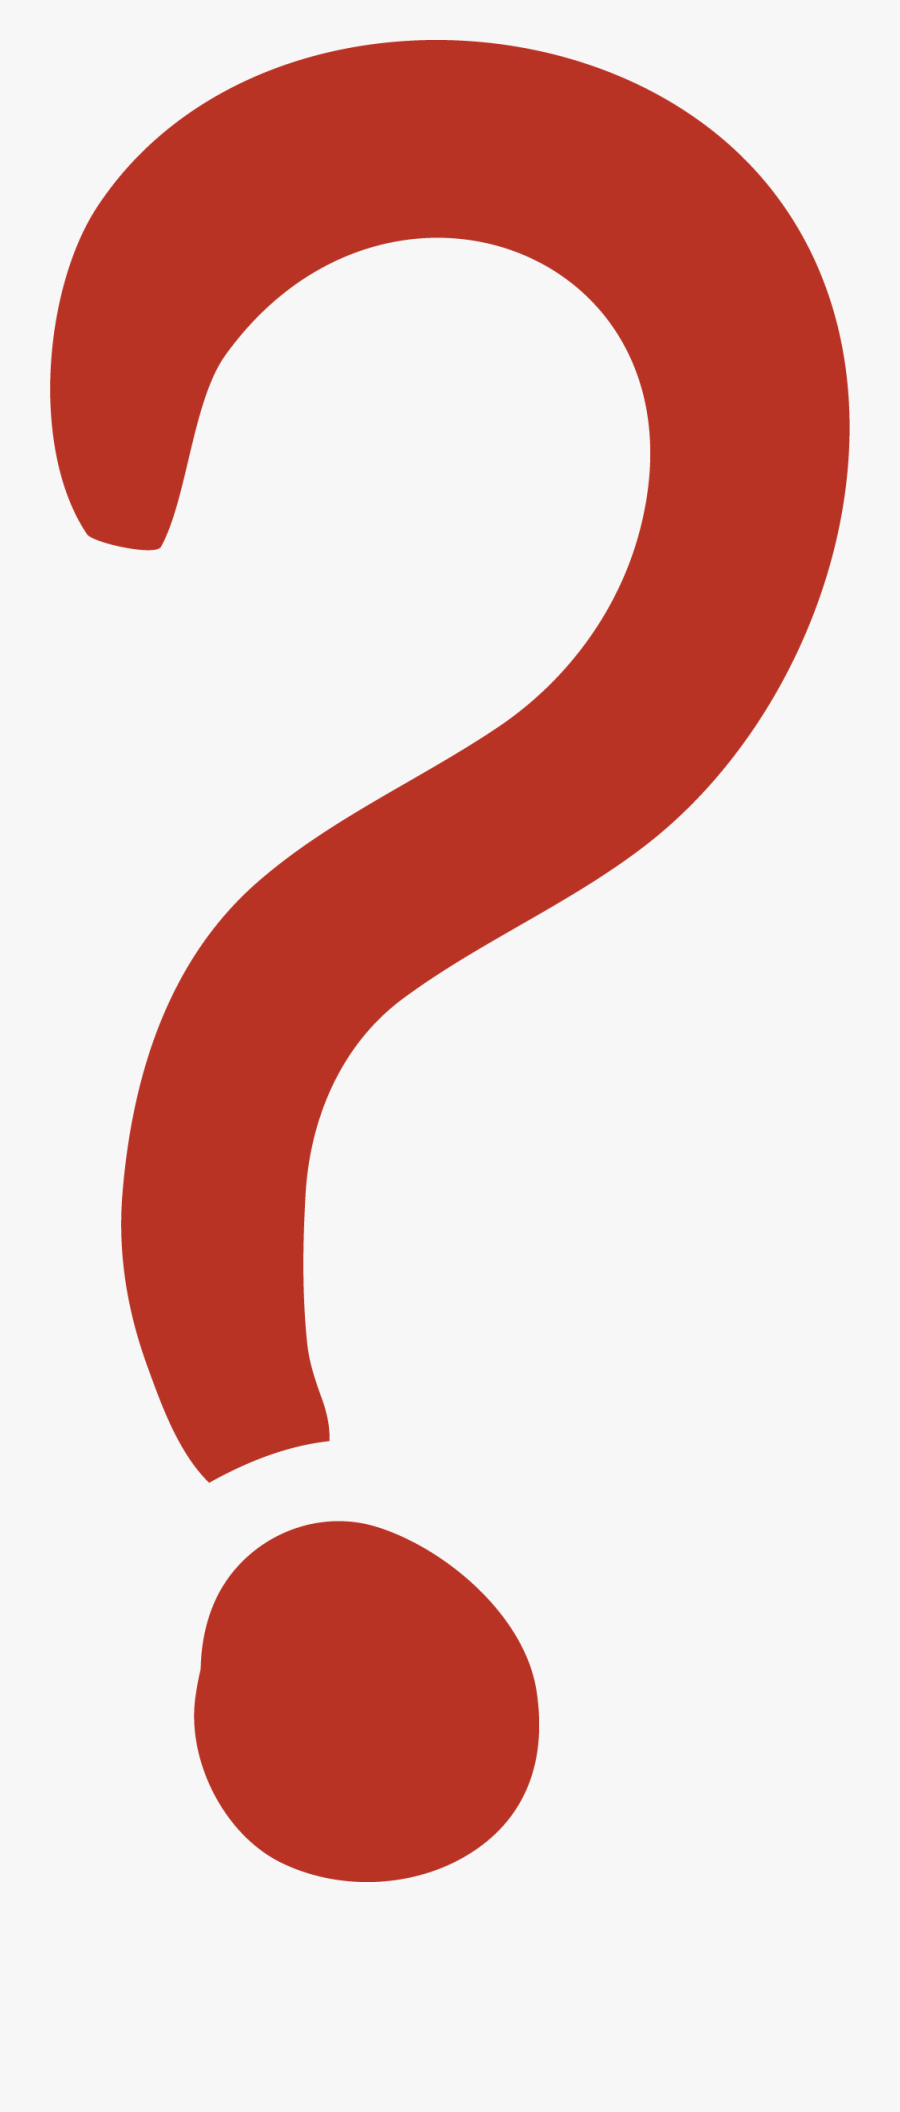 Transparent Animated Question Mark Clipart - Tanda Tanya Warna Merah, Transparent Clipart